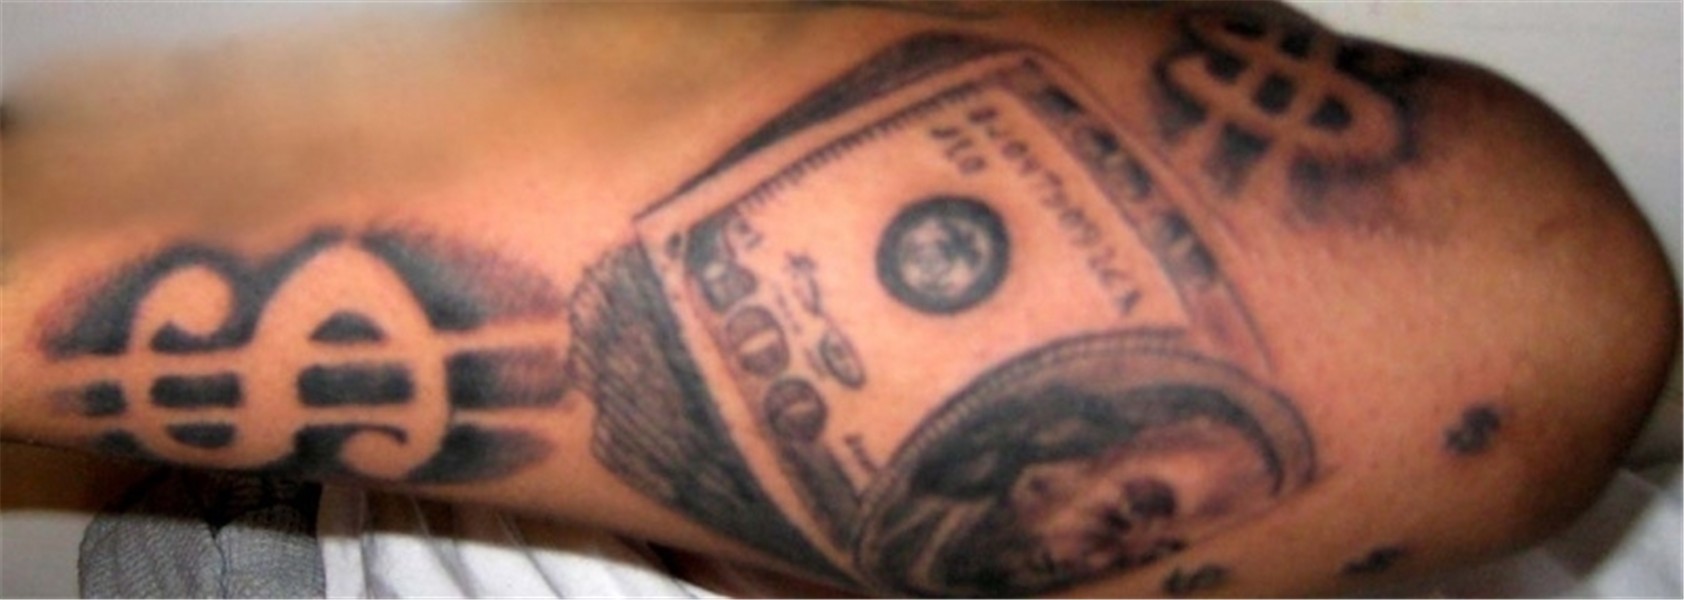 Money Sign Tattoo Designs - #GolfClub